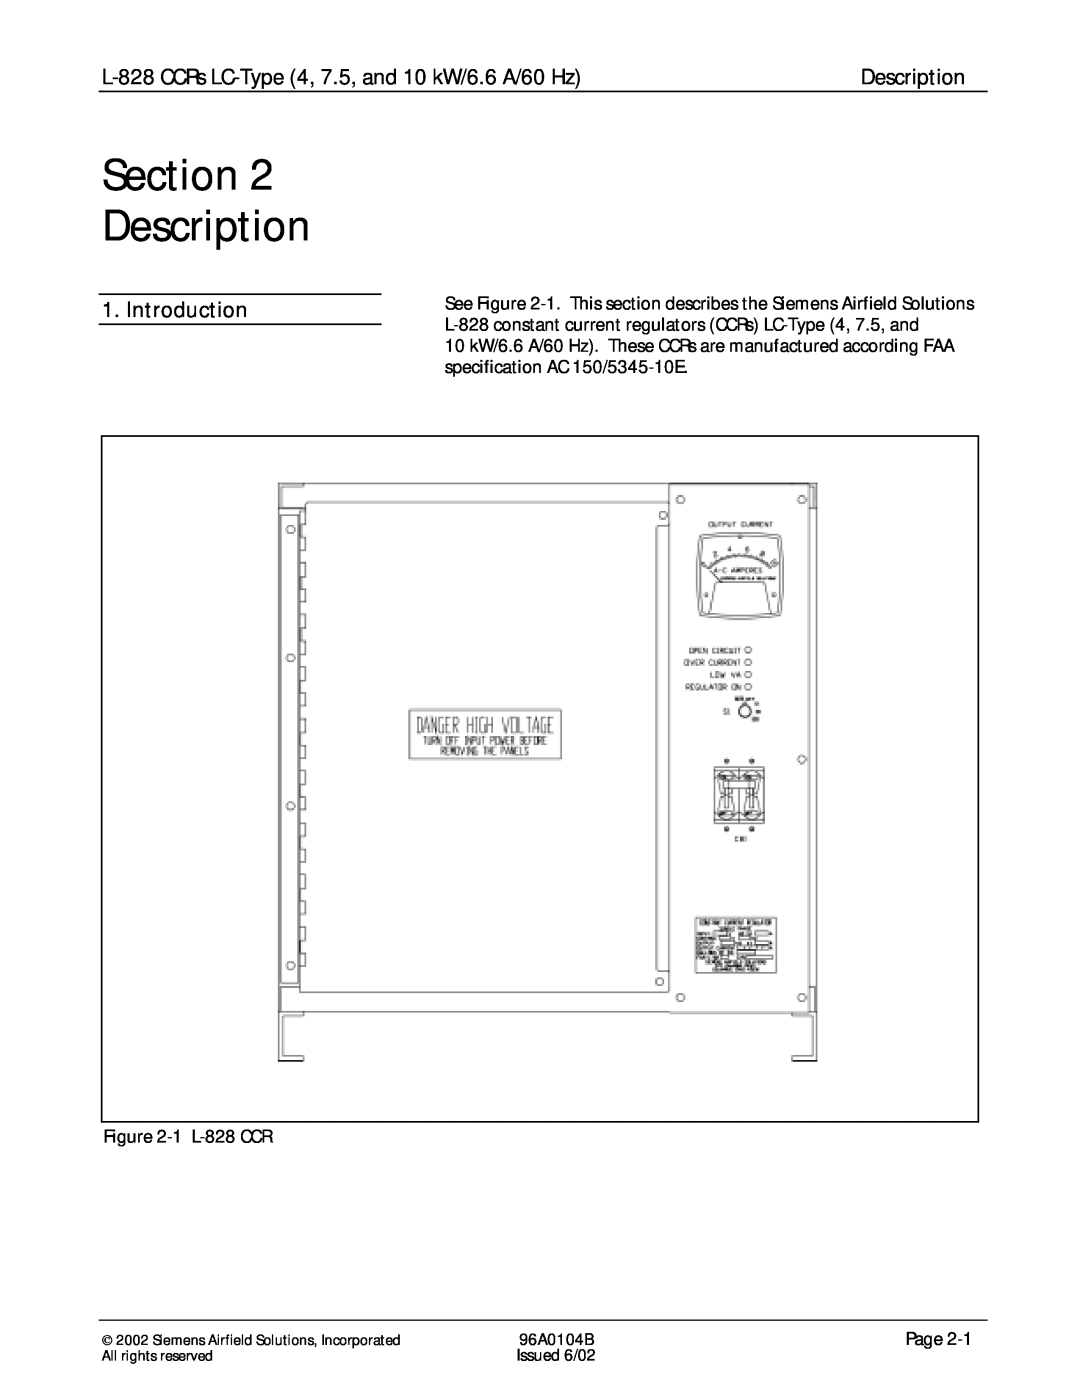 Siemens manual Description, Introduction, L-828CCRs LC-Type4, 7.5, and 10 kW/6.6 A/60 Hz 